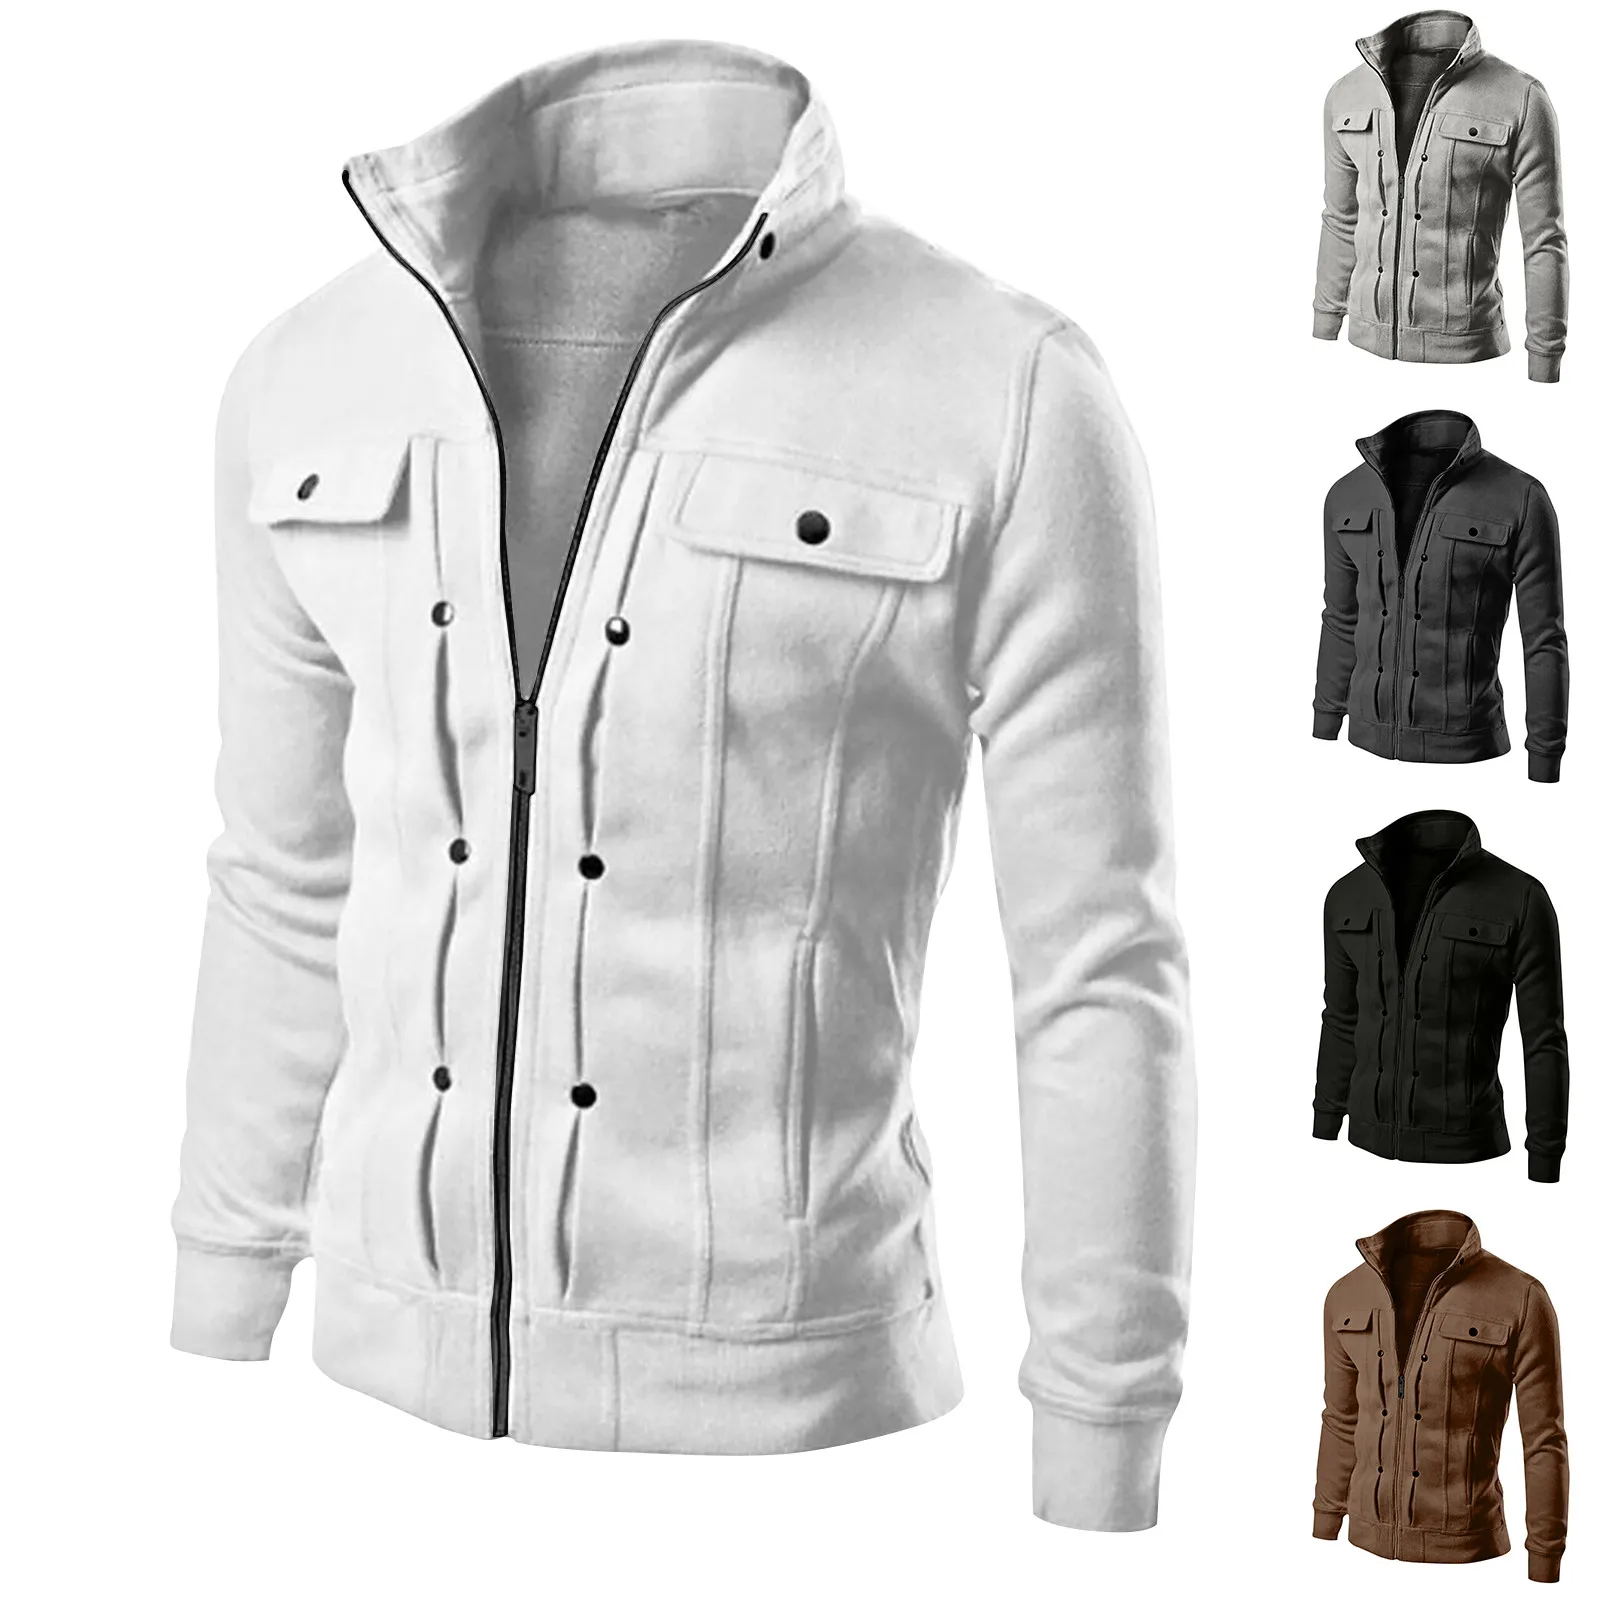 

Men's Jacket Zipper Button Coat Spring Autumn Stand Collar Decorated Sweatshirt Motorcycle Windproof Warm Jackets 2021 New